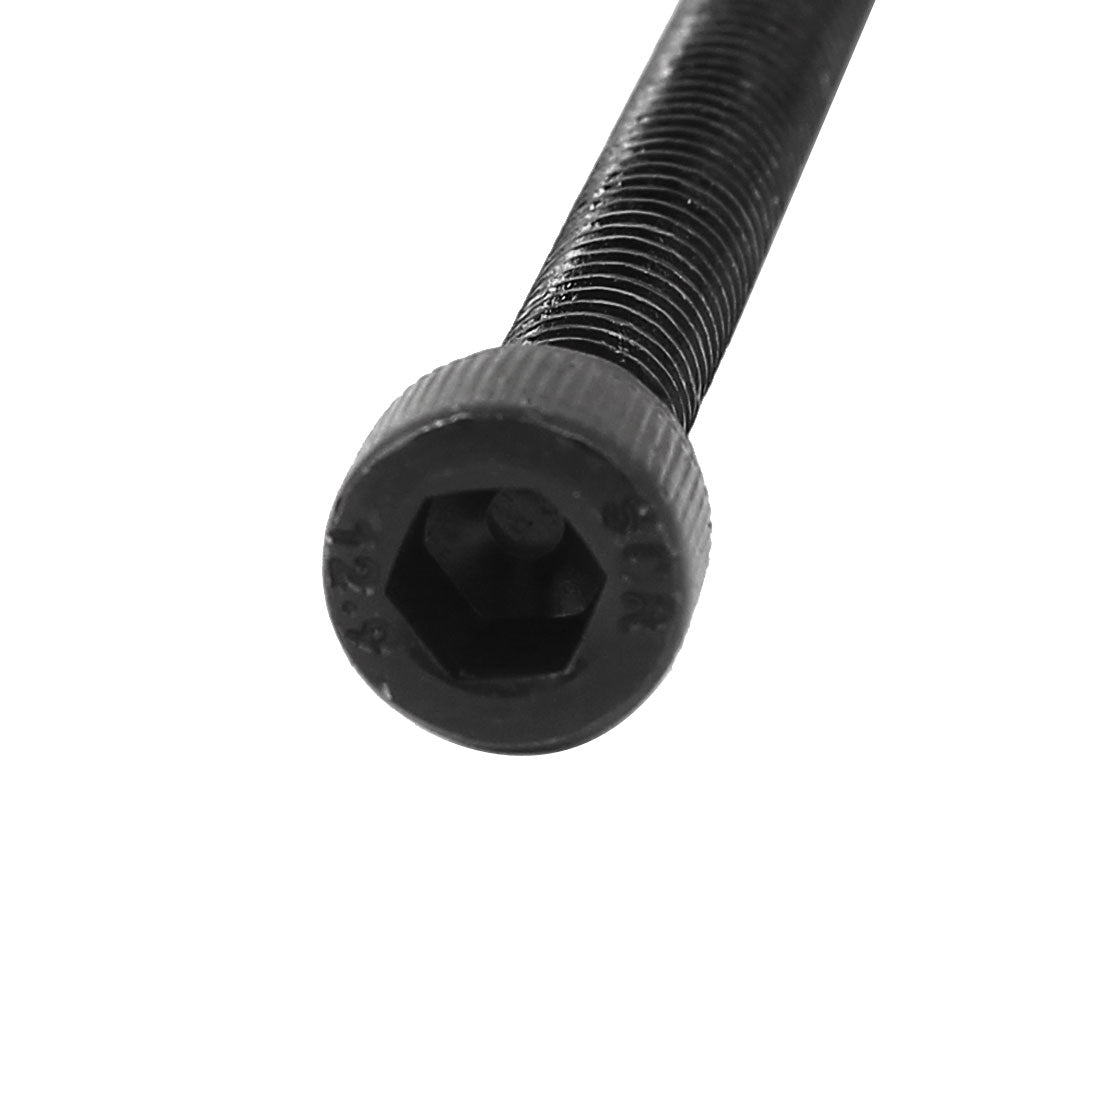 Uxcell Uxcell M6 x 8mm Full Thread Carbon Steel Hex Socket Cap Head Screws Bolts Black 50 Pcs